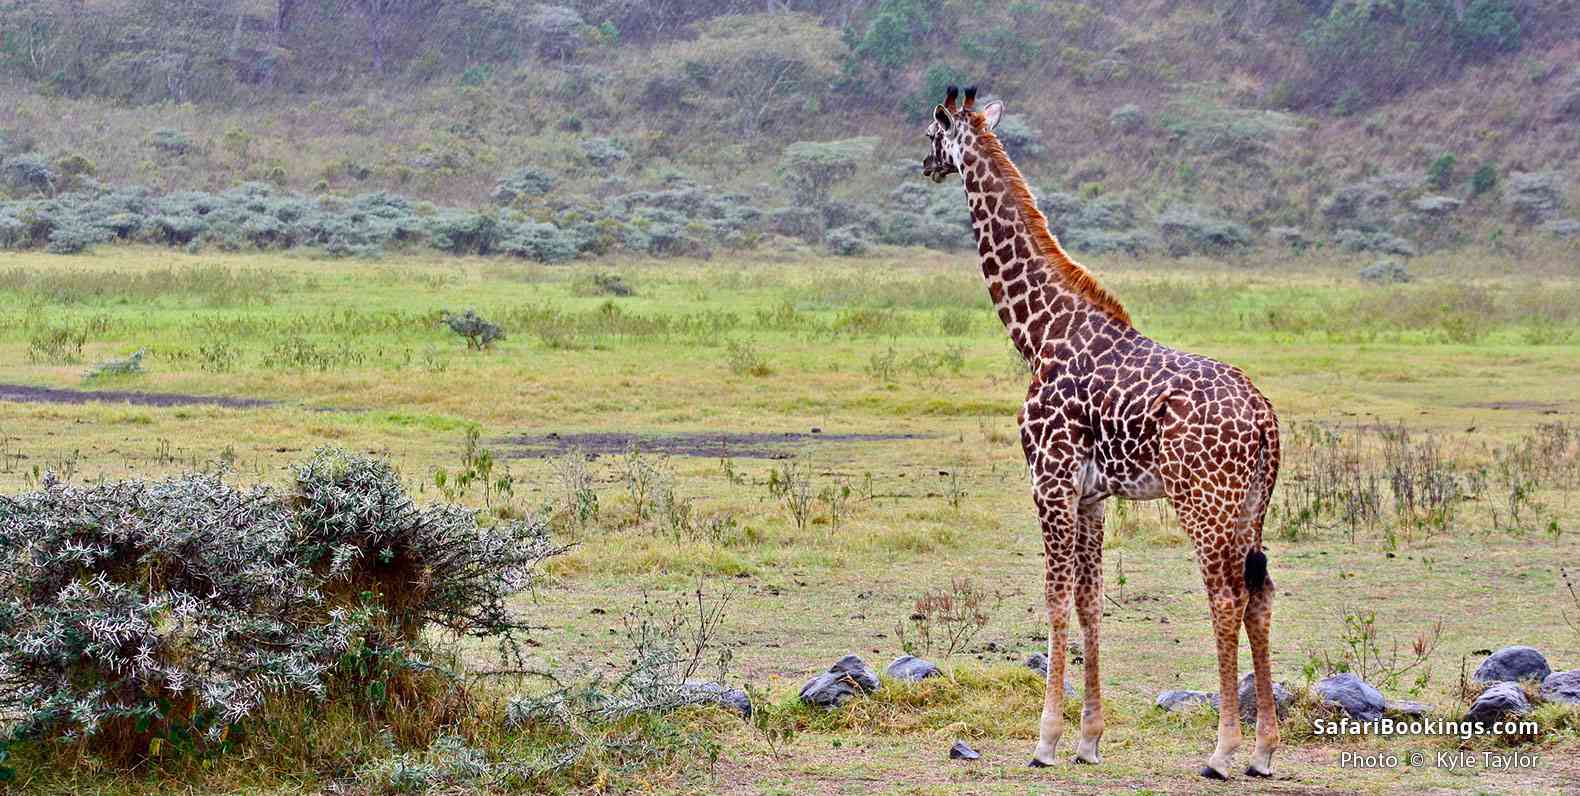 Giraffe at Arusha National Park